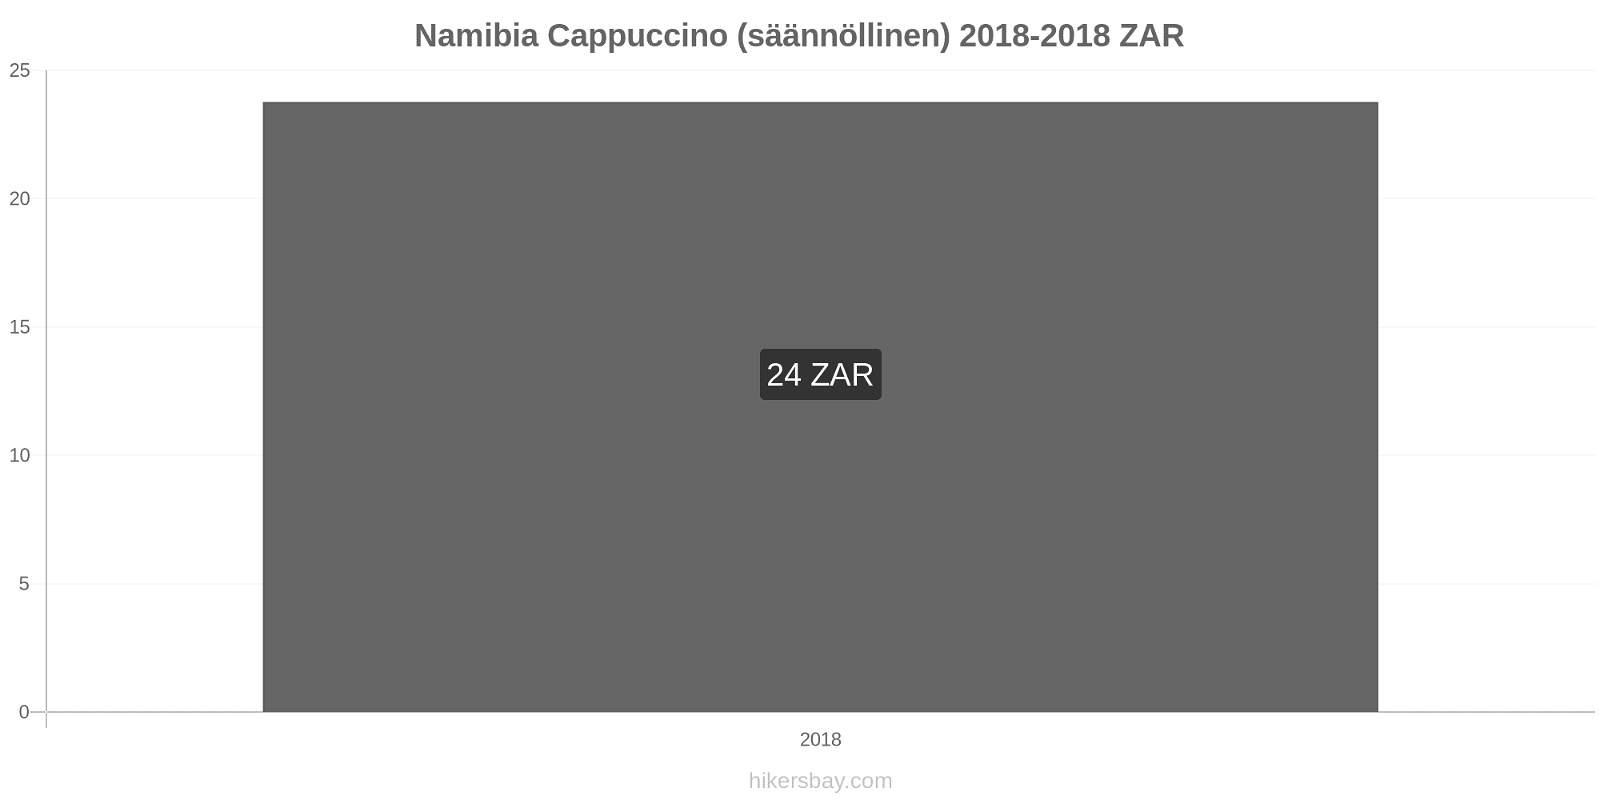 Namibia hintojen muutokset Cappuccino (säännöllinen) hikersbay.com